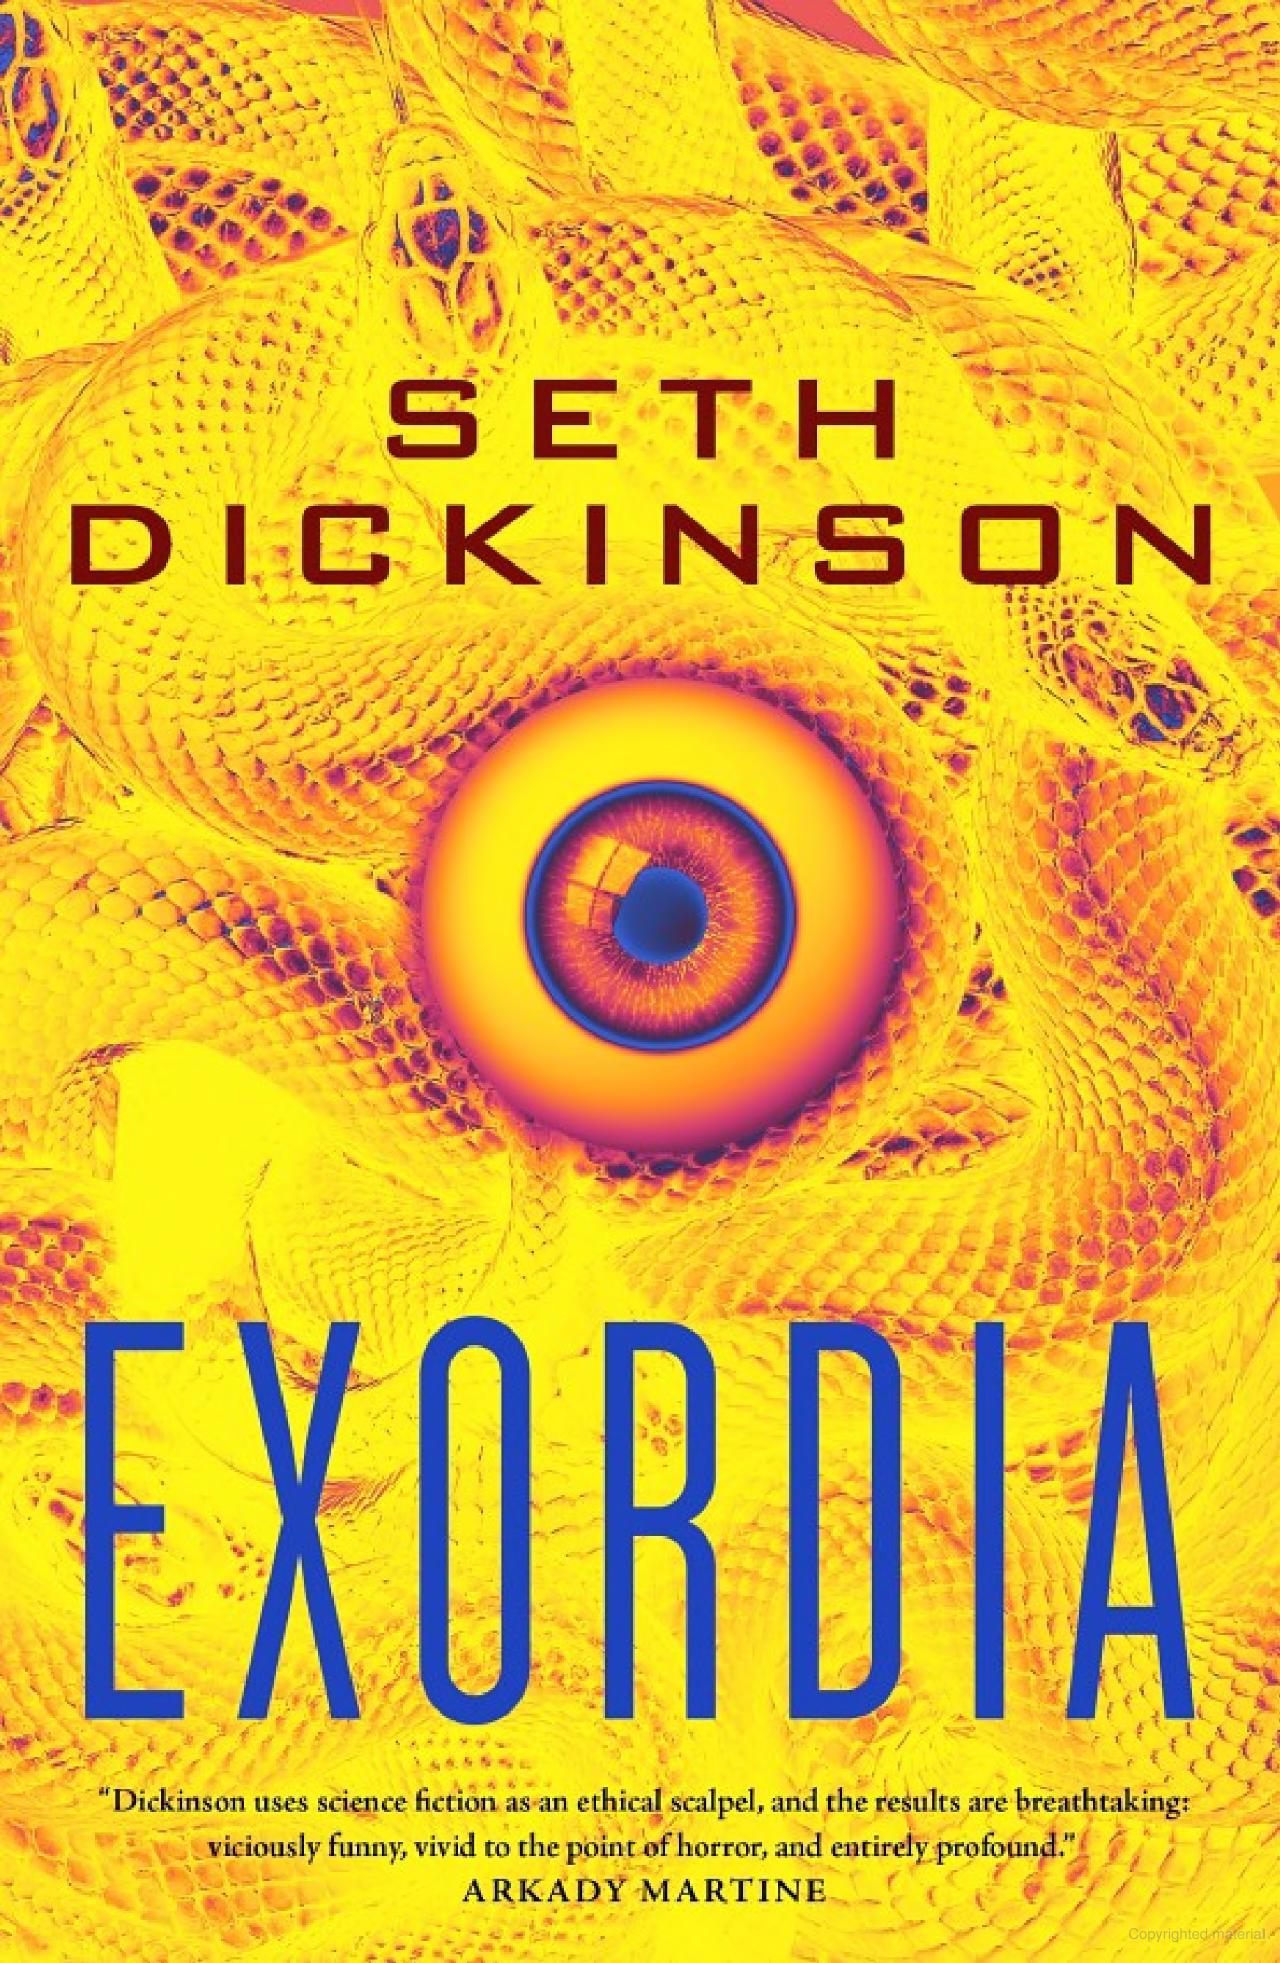 Exordia -Seth Dickinson - The Society for Unusual Books